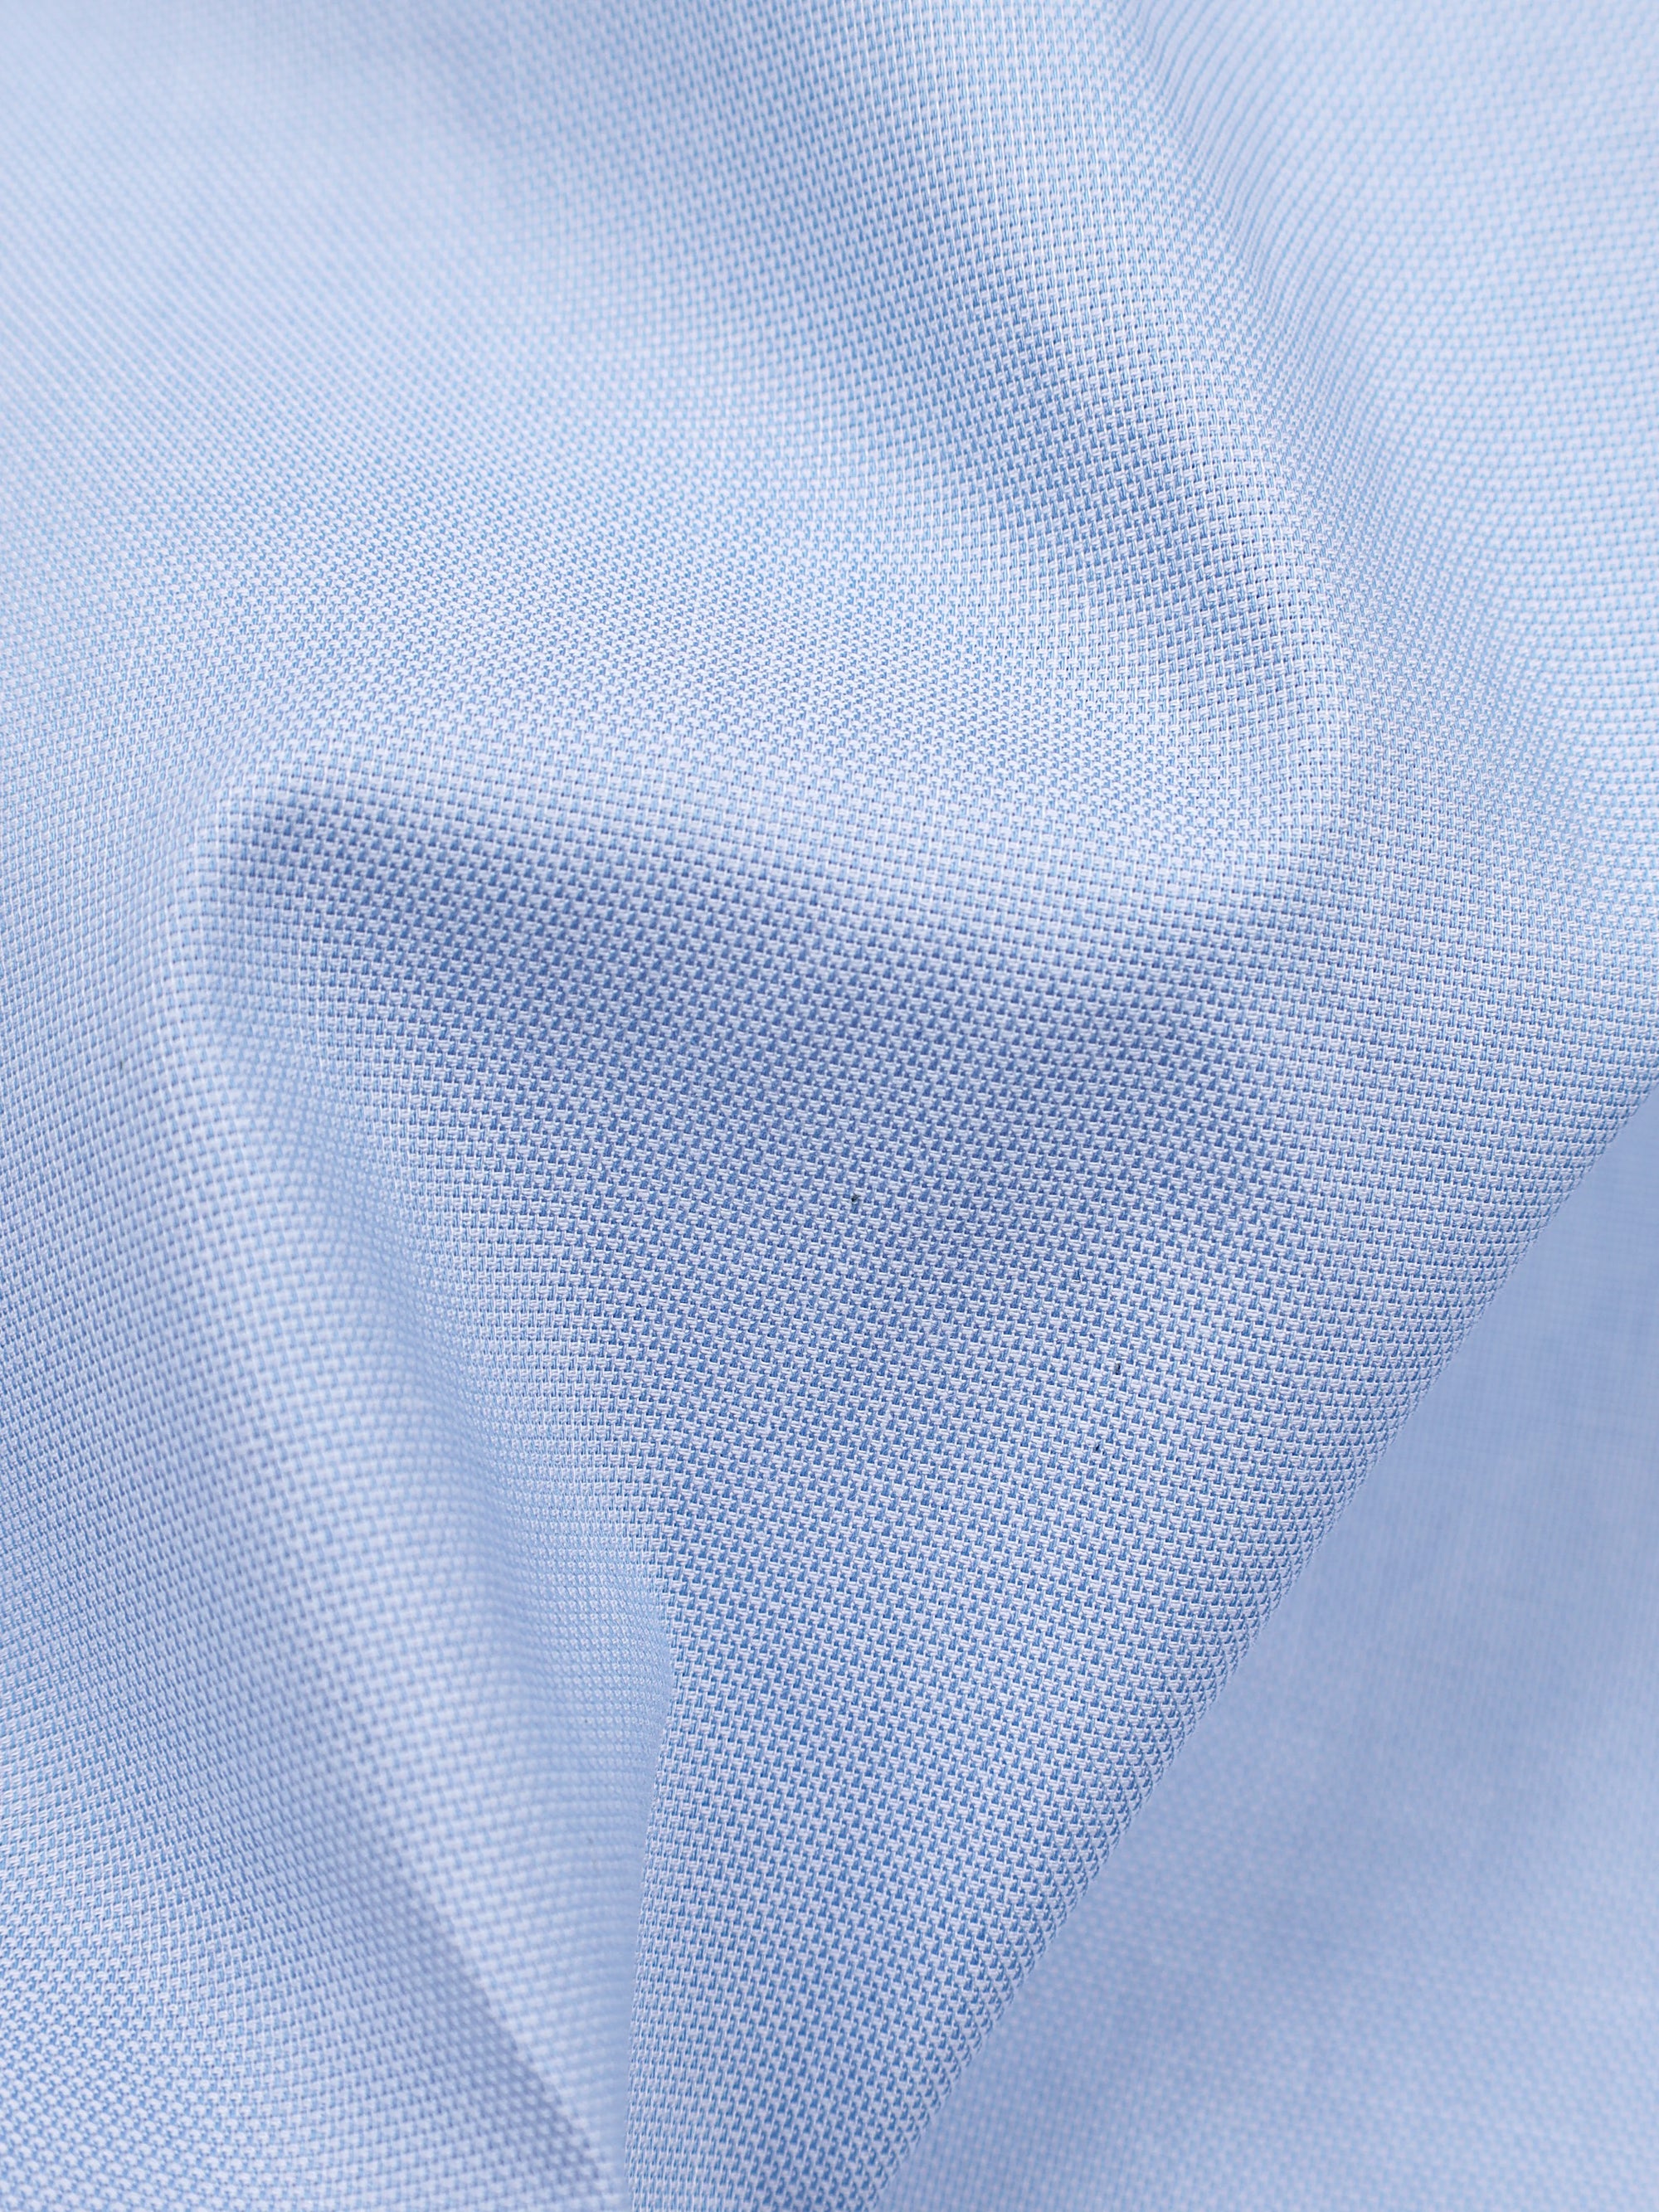 Pale Light Blue Mock Leno Solid Premium Cotton Officewear Shirt